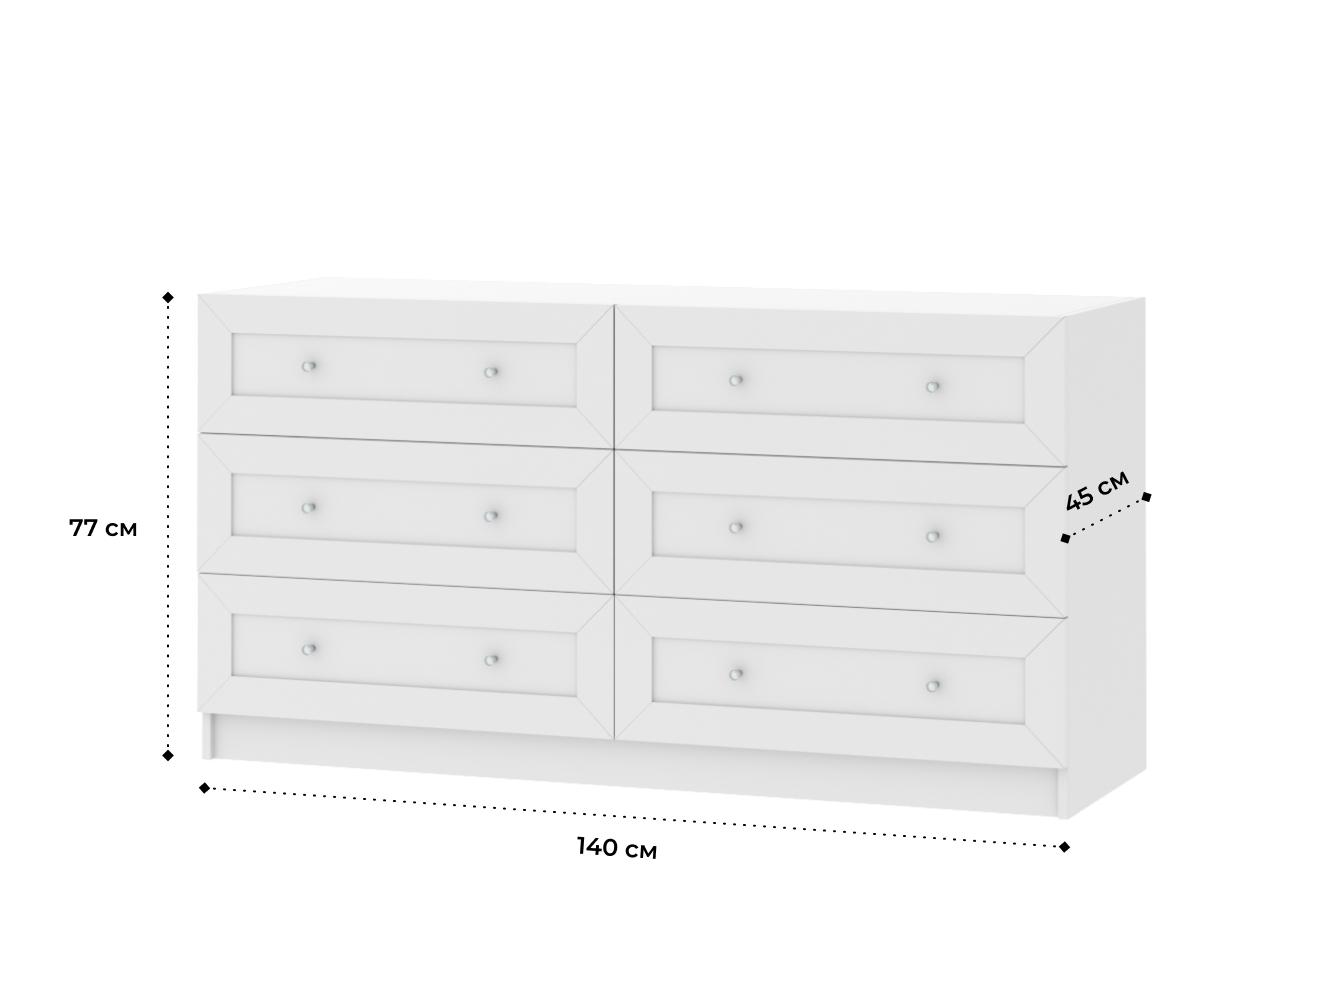 Изображение товара Комод Билли 219 white ИКЕА (IKEA), 140x45x77 см на сайте adeta.ru